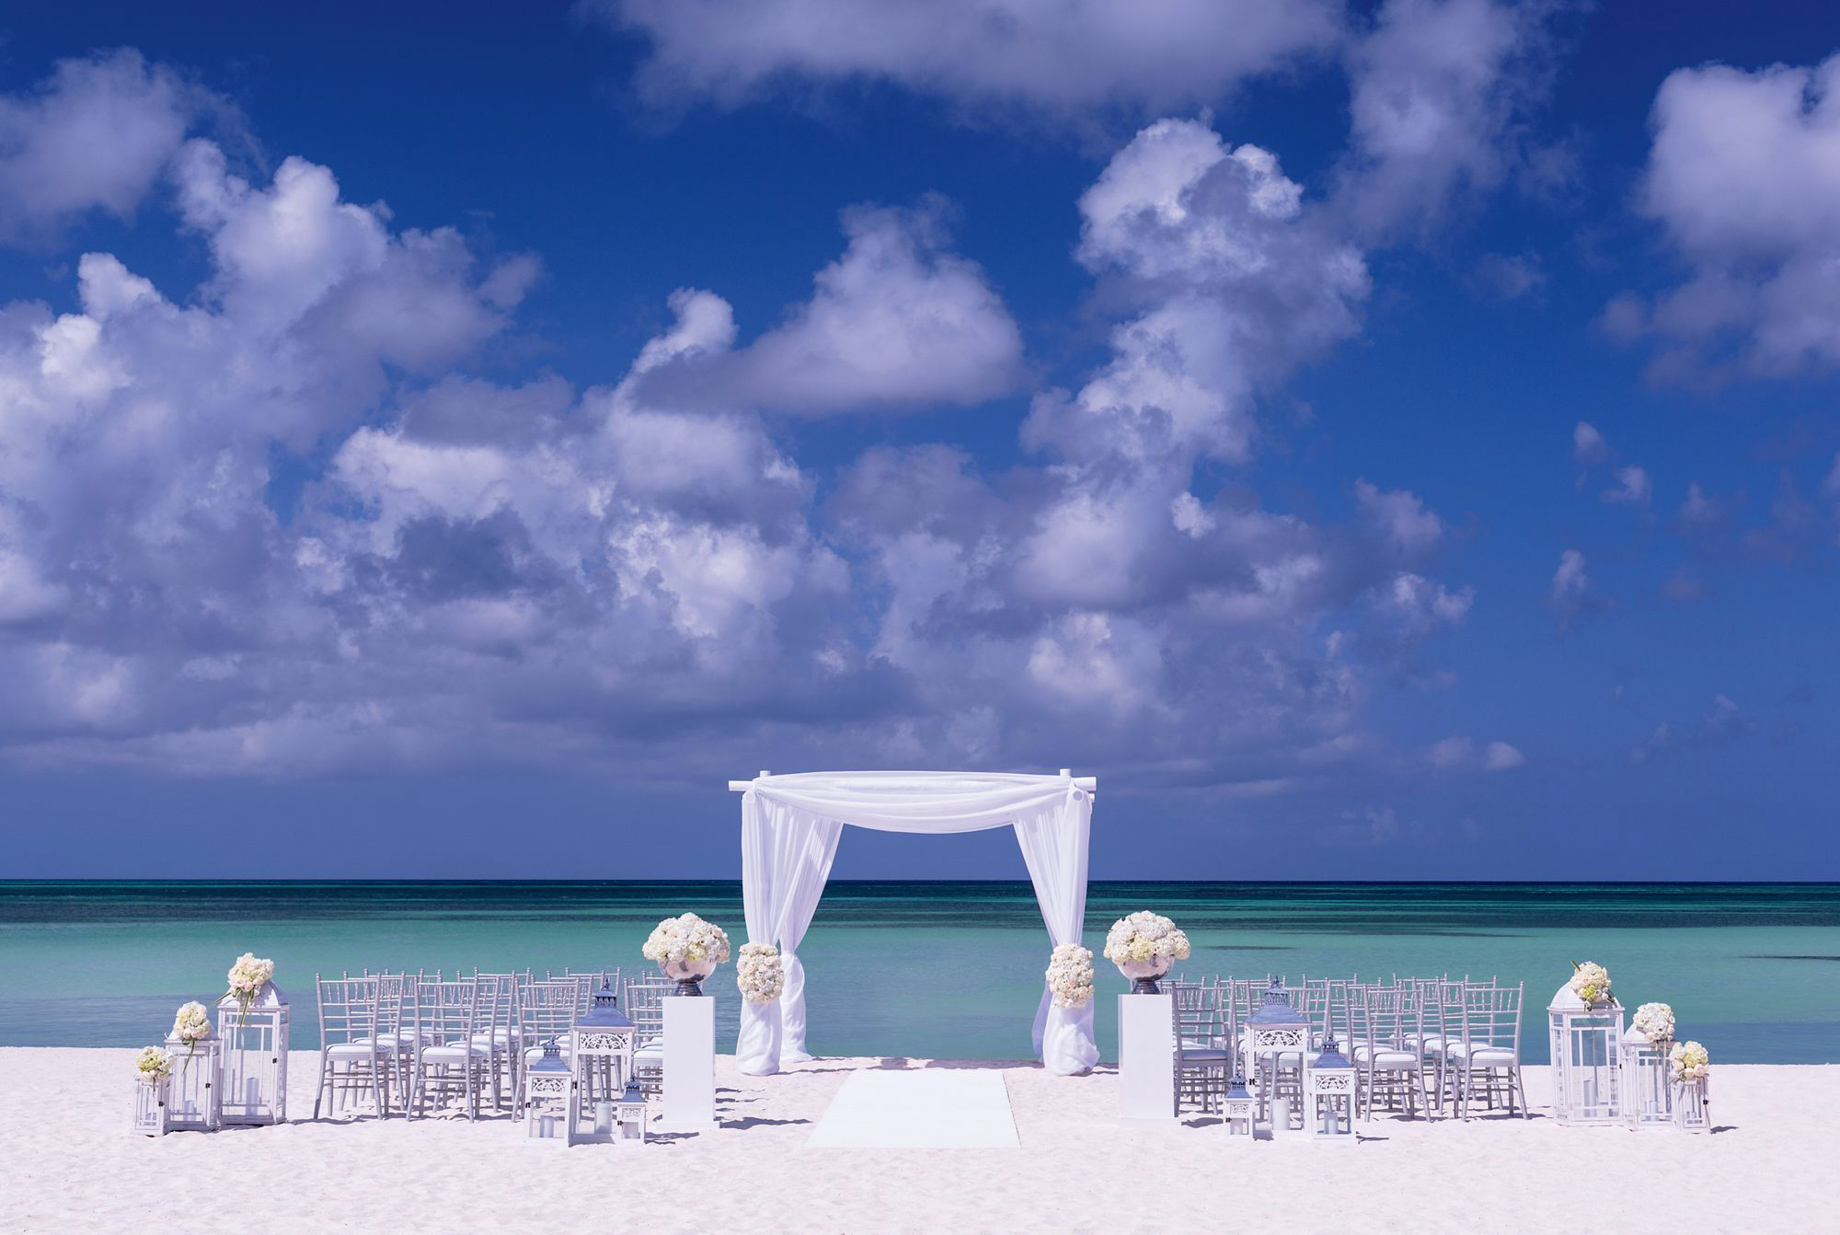 The Ritz-Carlton, Aruba Resort - Palm Beach, Aruba - Beach Wedding